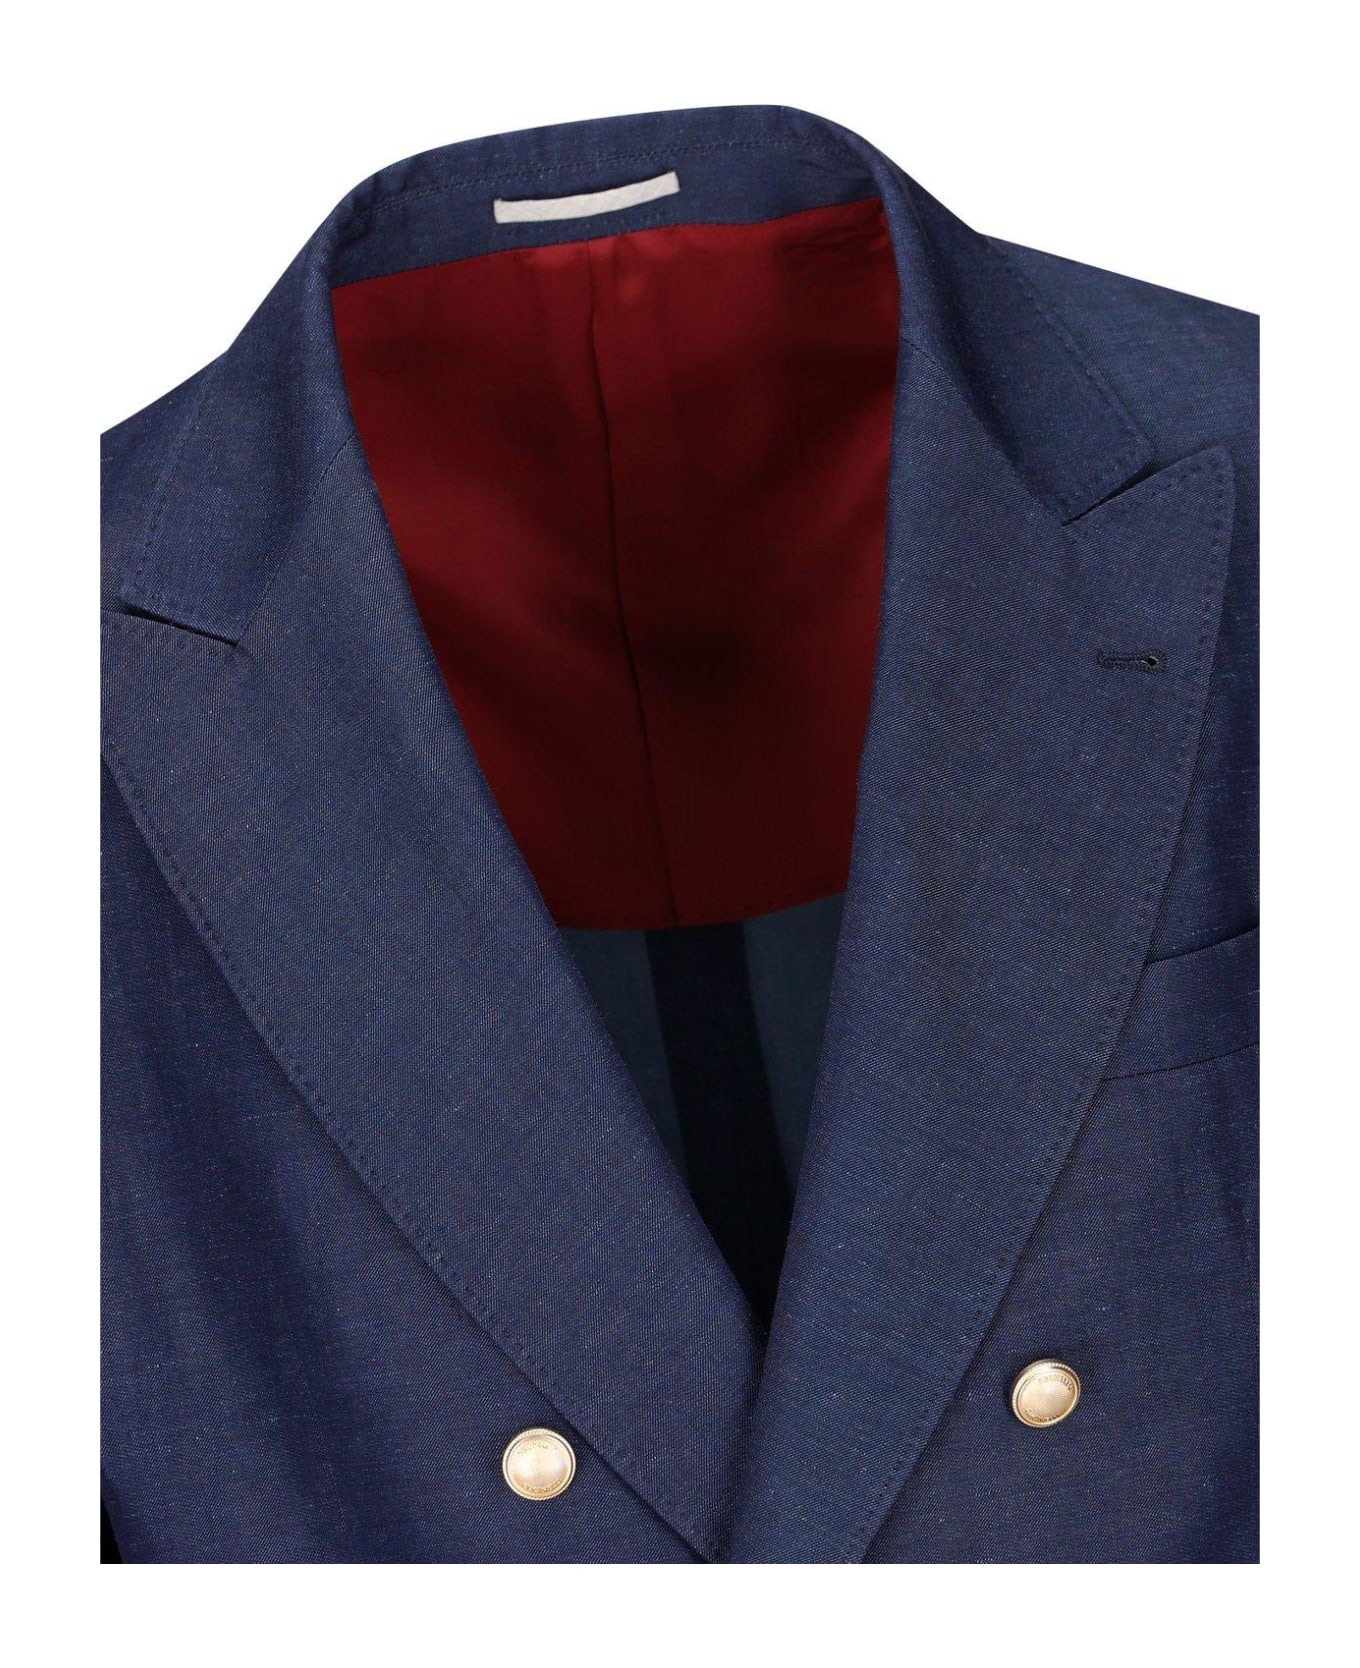 Brunello Cucinelli Double-breasted Suit - BLU